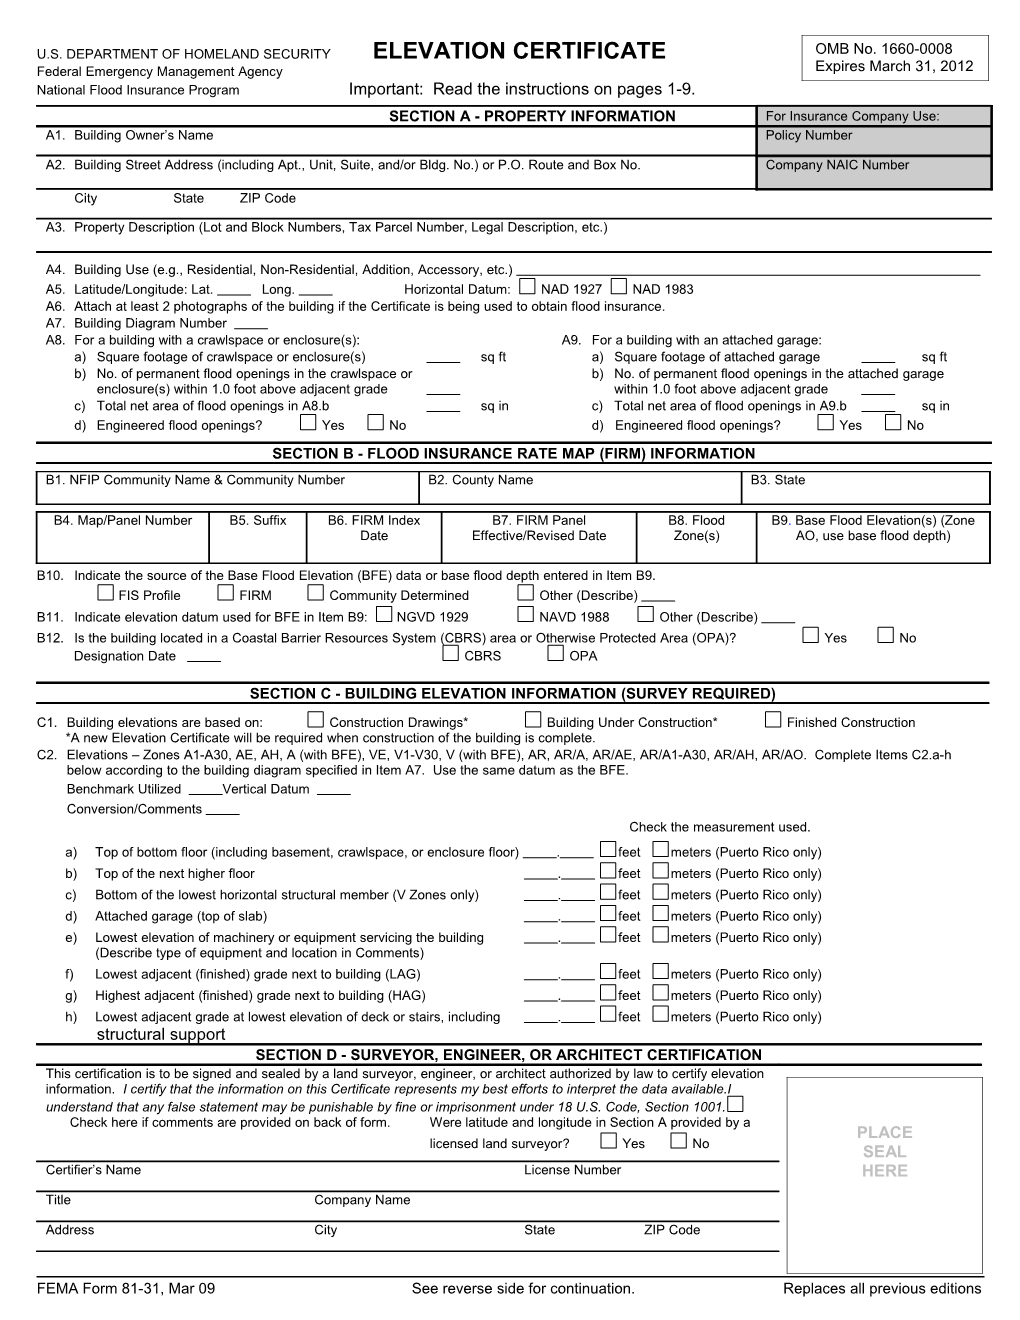 U.S. Department of Homeland Security Elevation Certificate